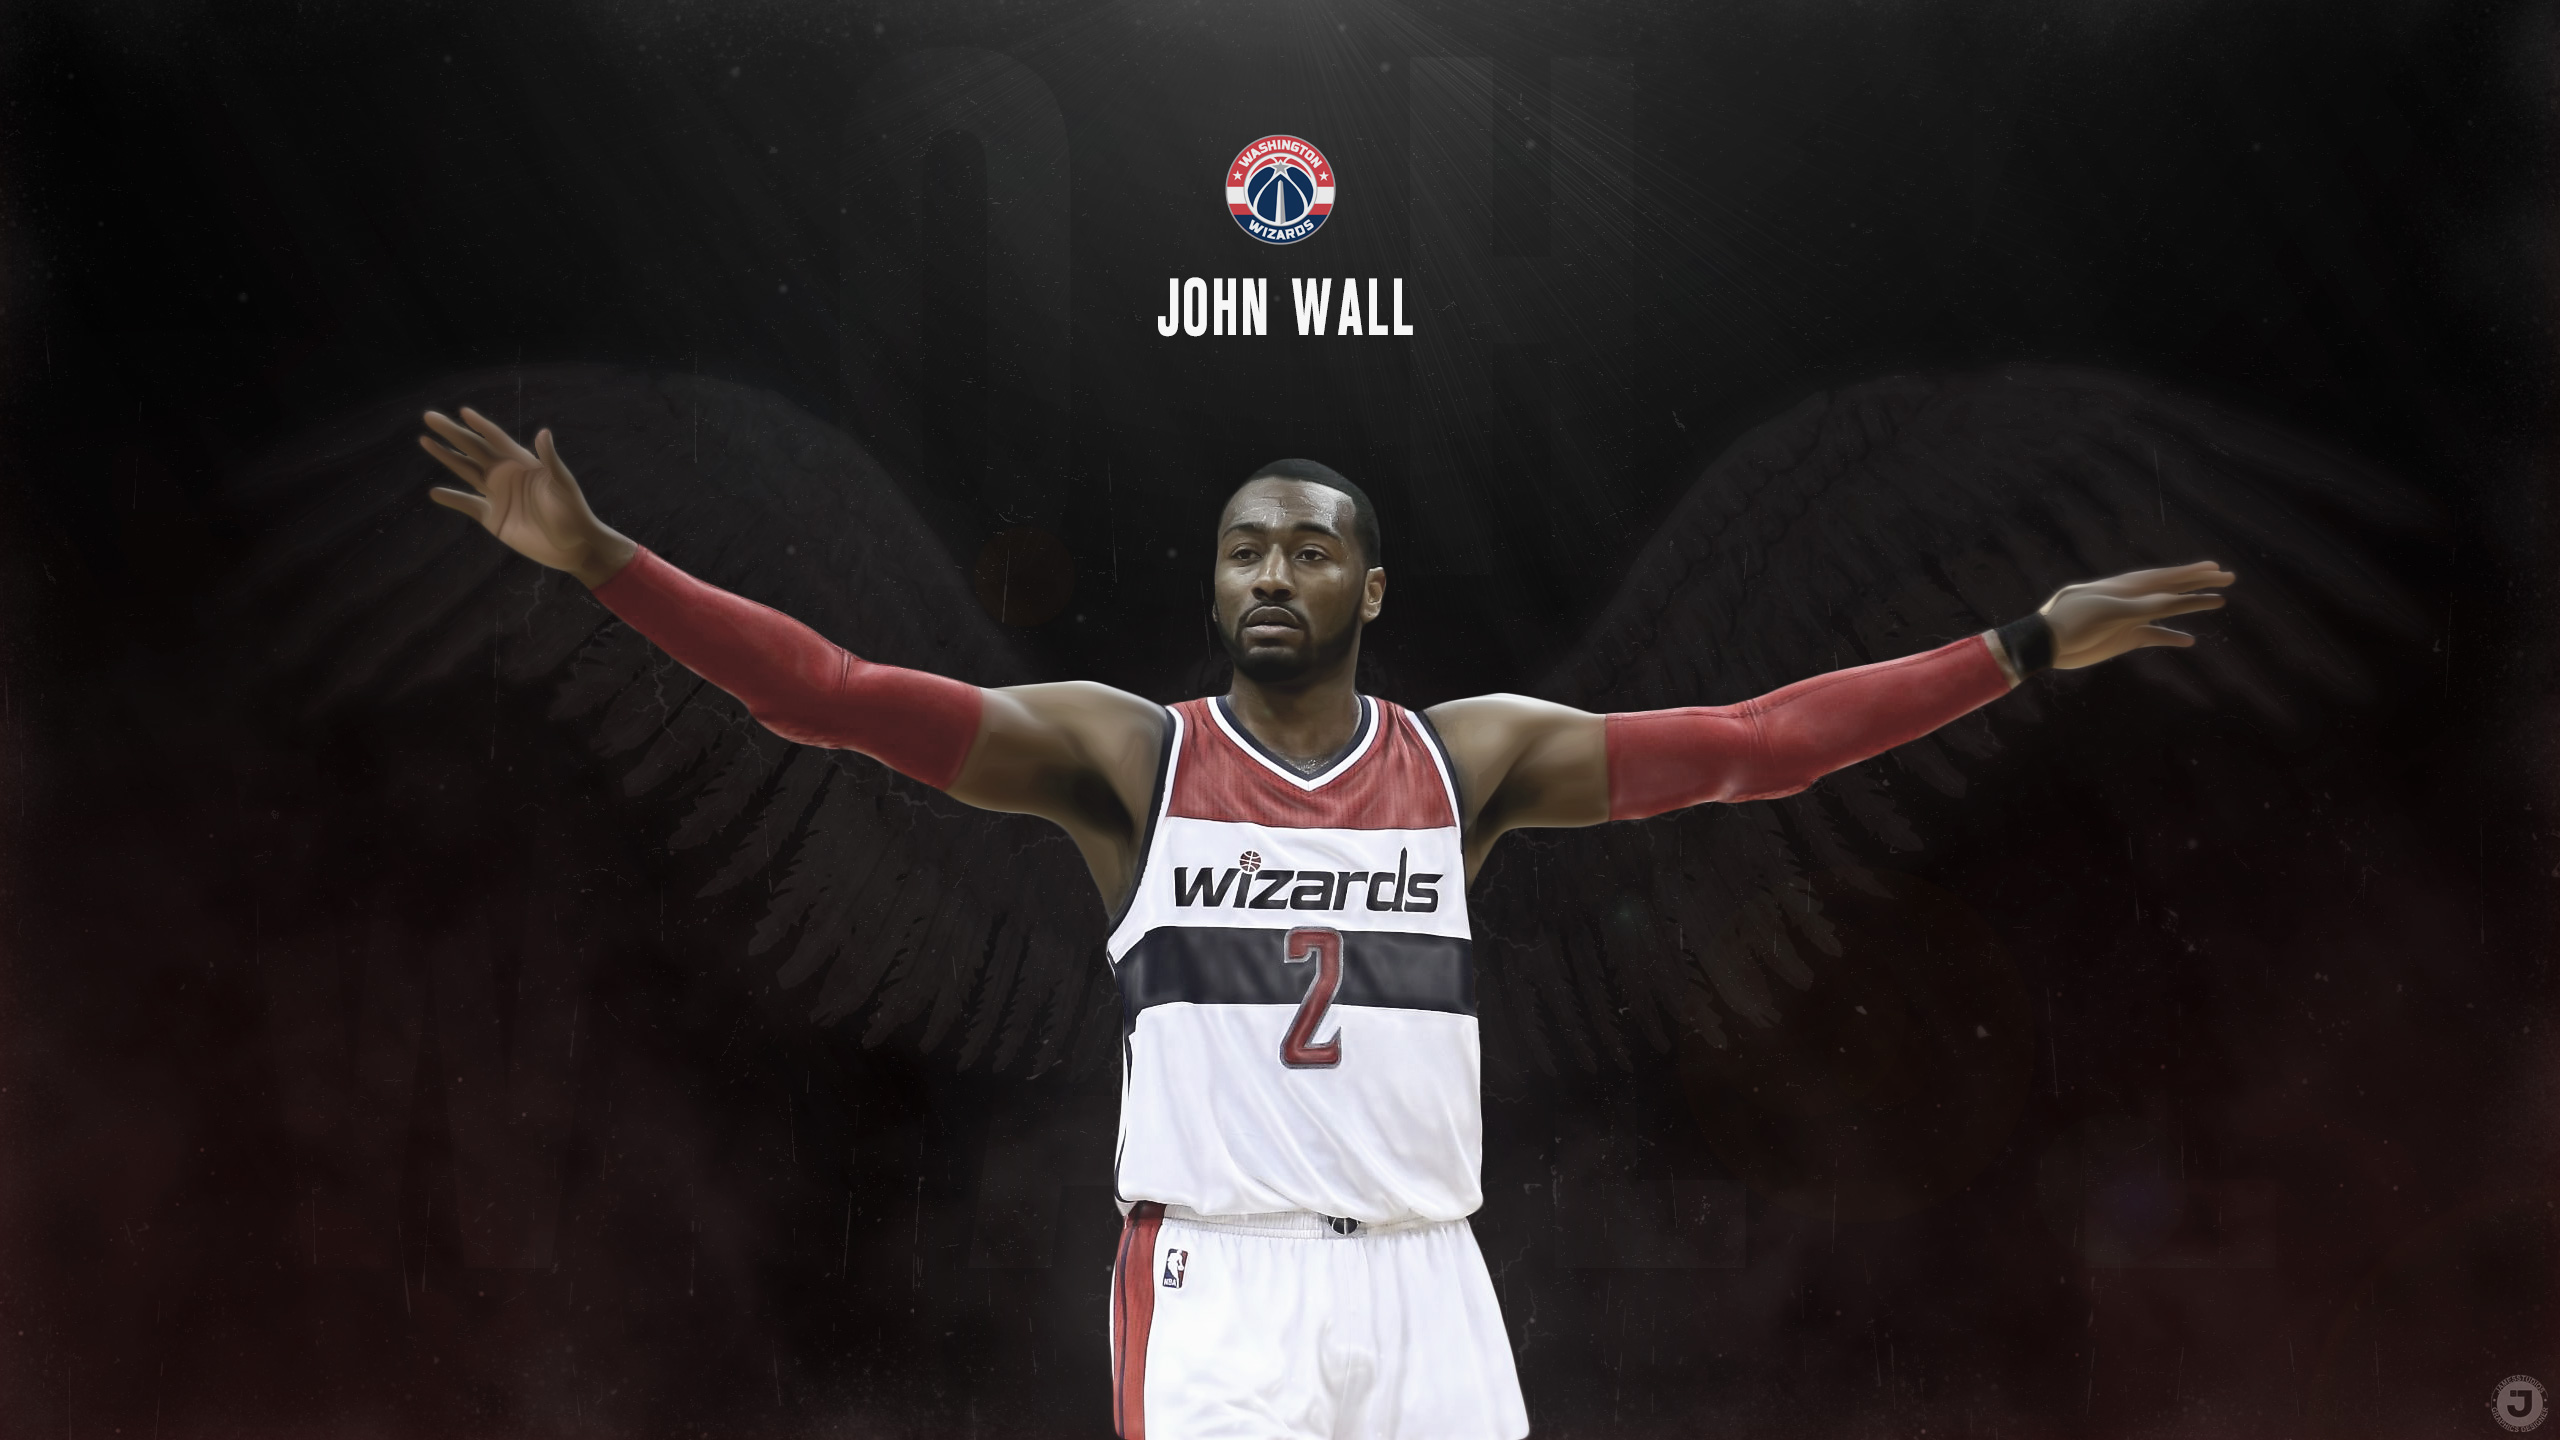 John Wall Wallpapers | Basketball Wallpapers at BasketWallpapers com